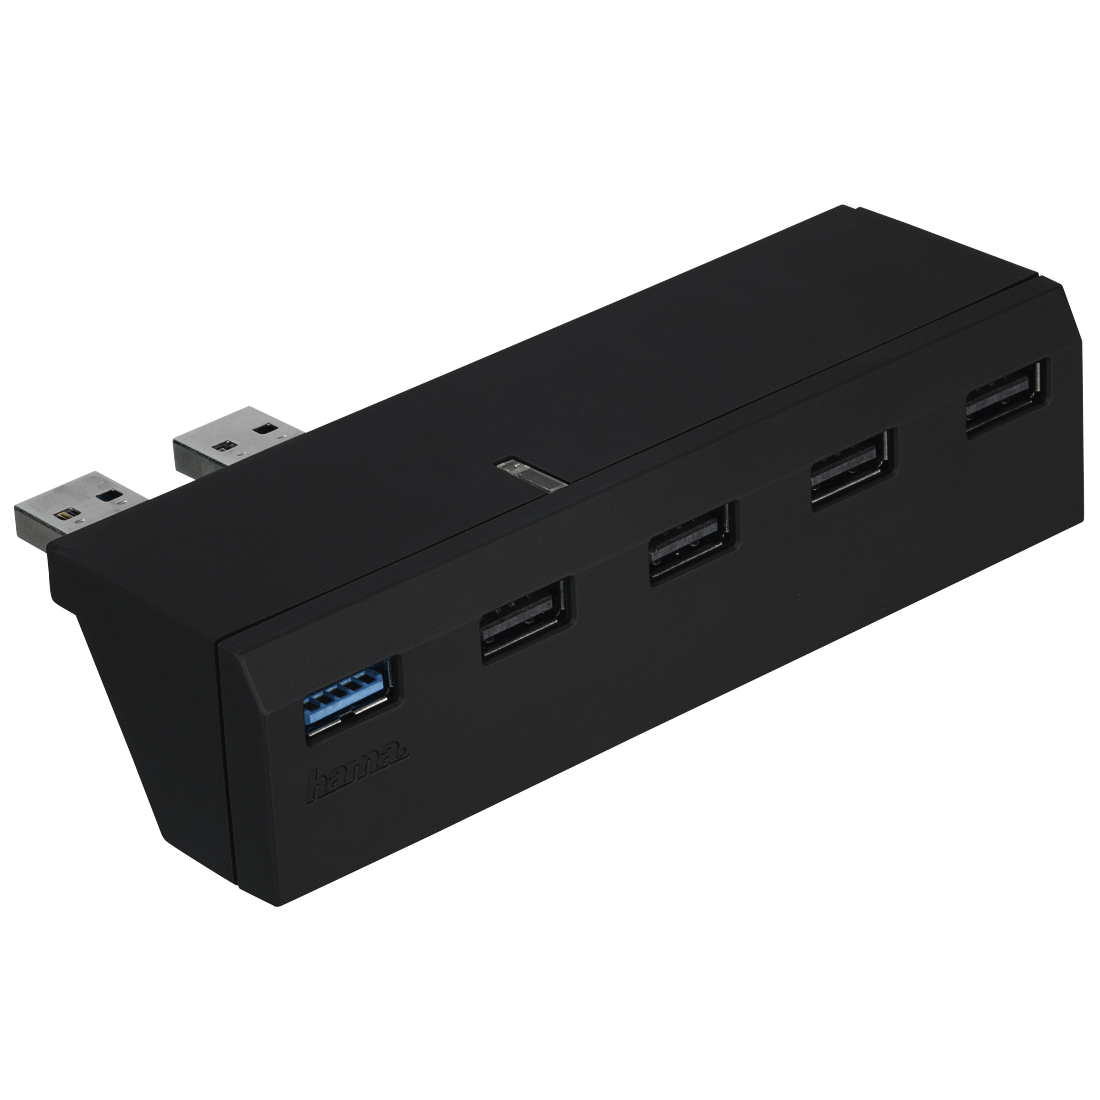 00115418 Hama USB Hub for PS4, 5 ports